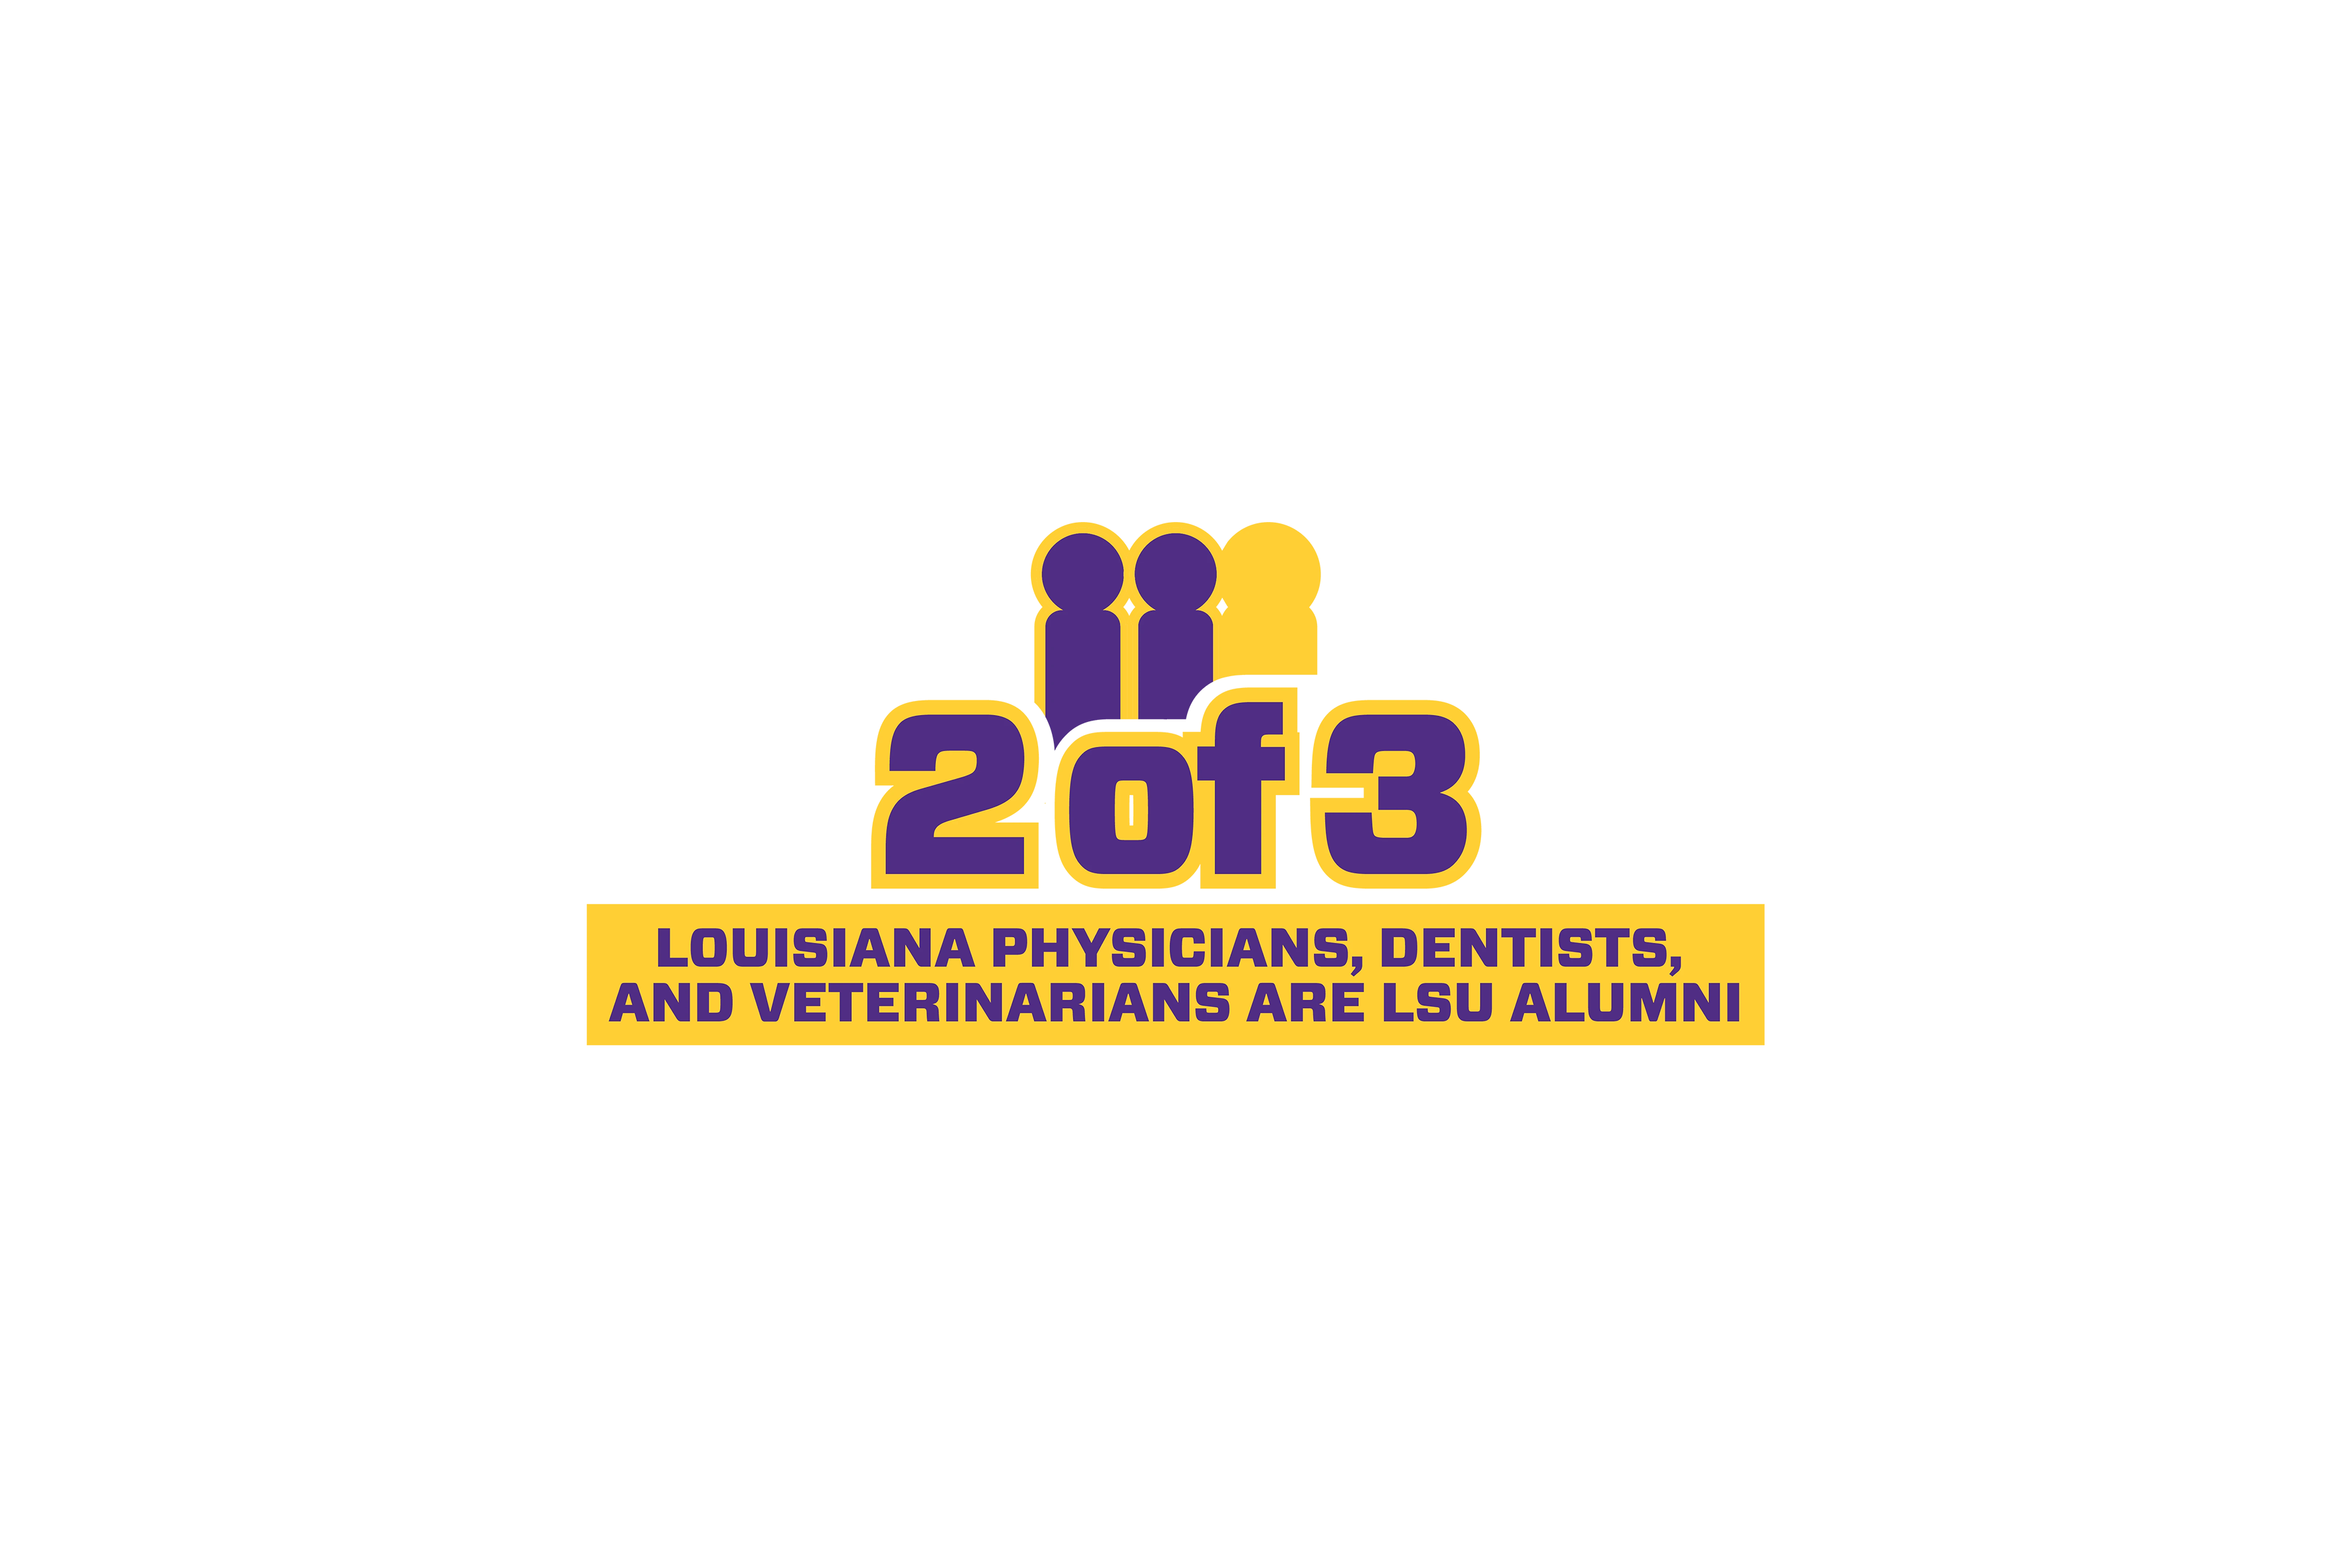 2 of 3 Louisiana doctors, dentists and veterinarians are LSU Alumni